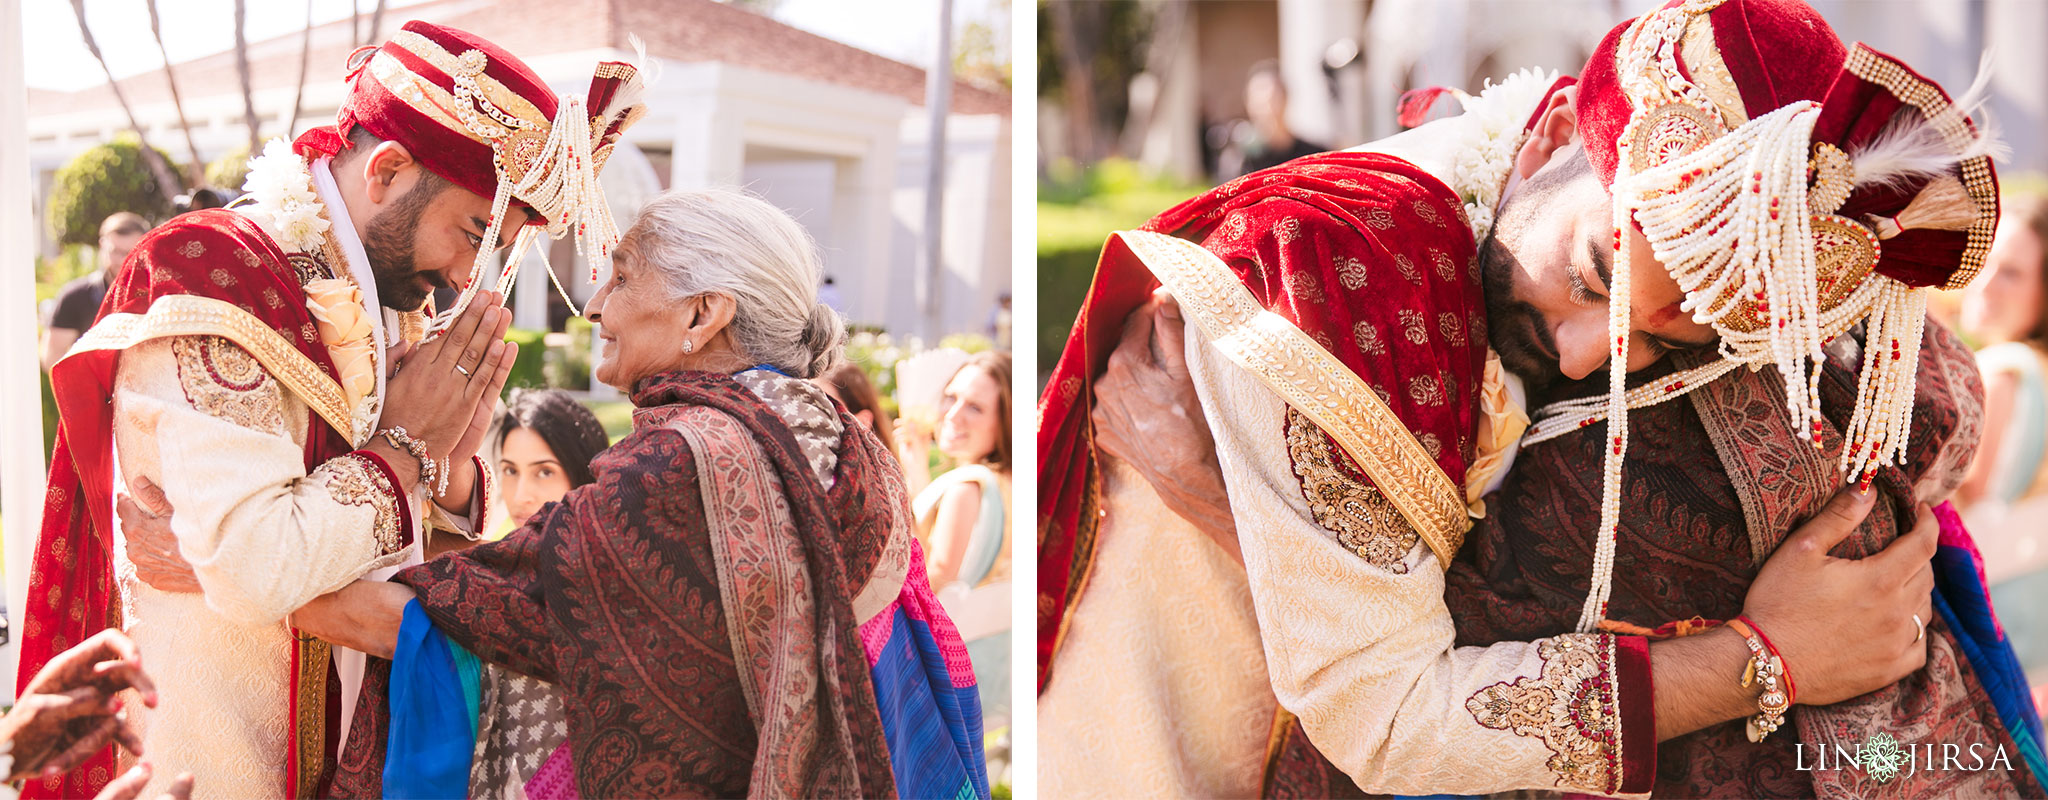 035 richard nixon library yorba linda indian wedding ceremony photography